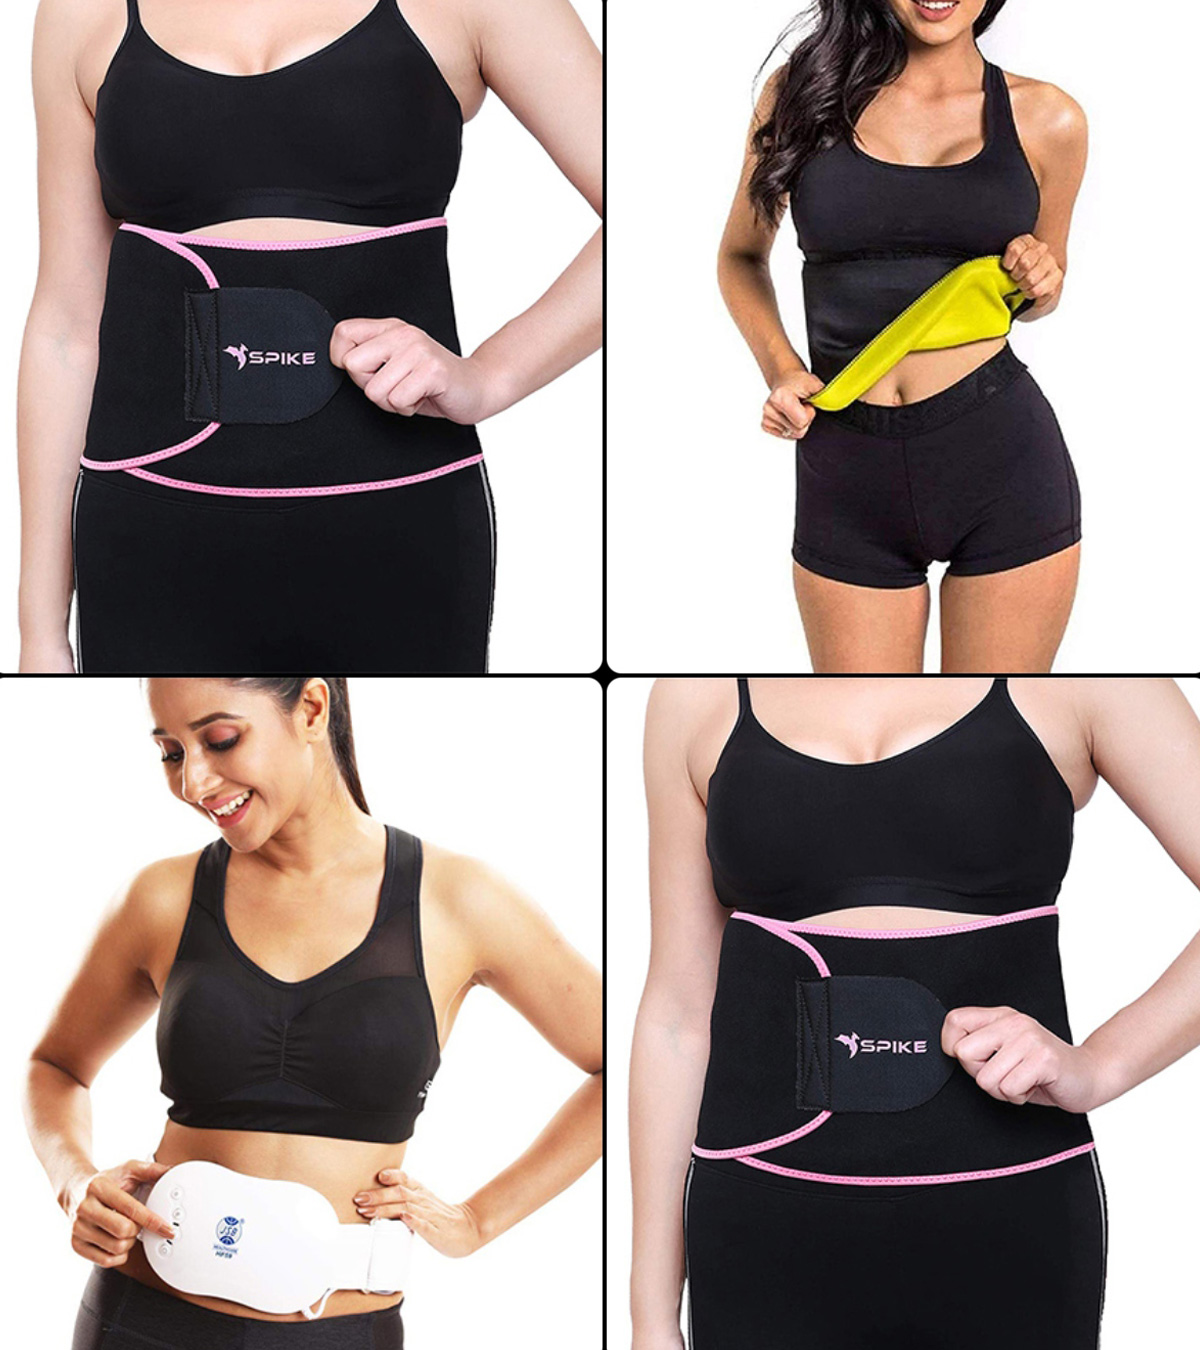 Sweatness Women's Fat Burning Slimming Belt incl Pink Weight loss guarantee, 